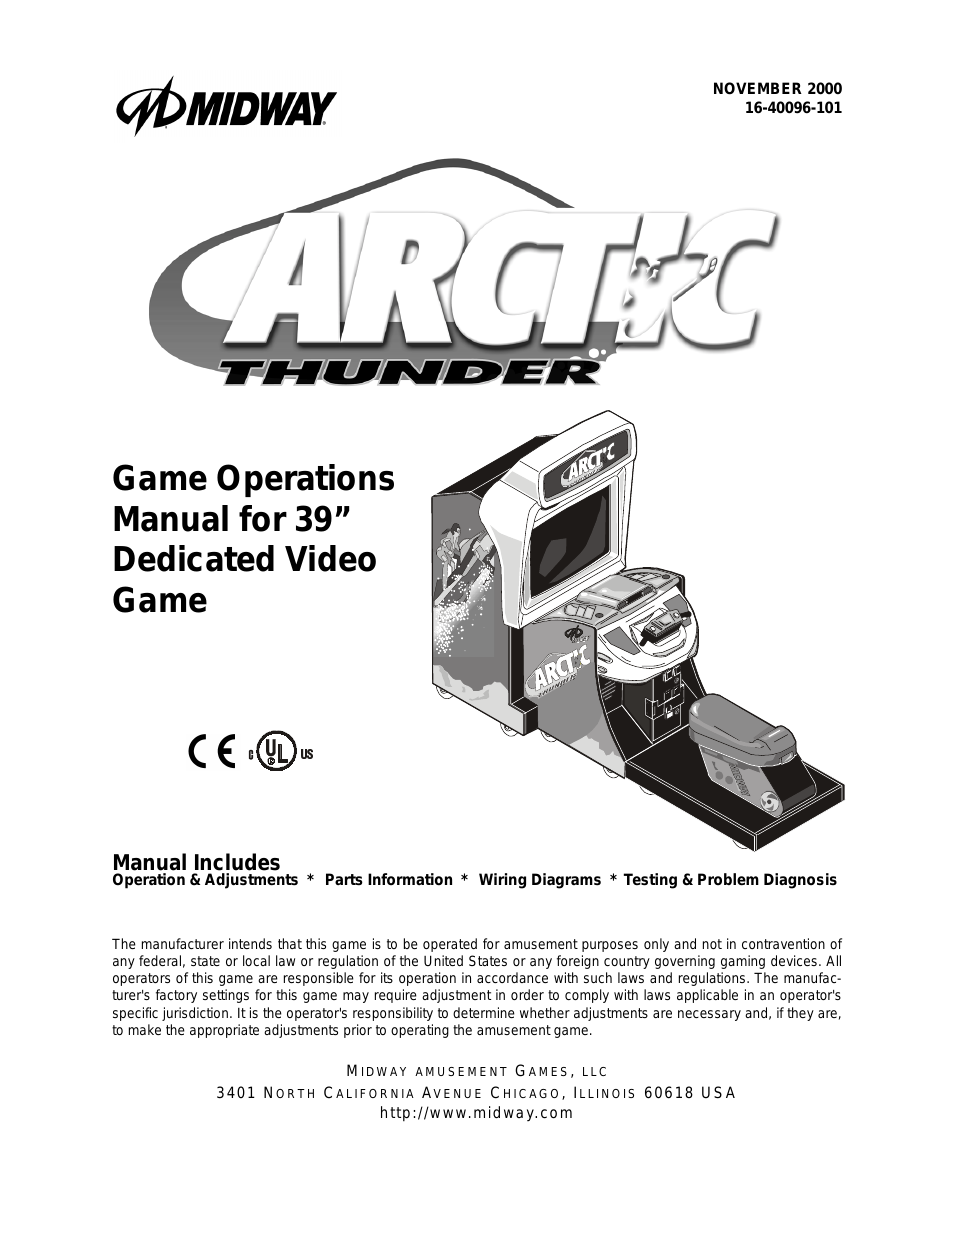 27" Dedicated Video Game Arctic Thunder